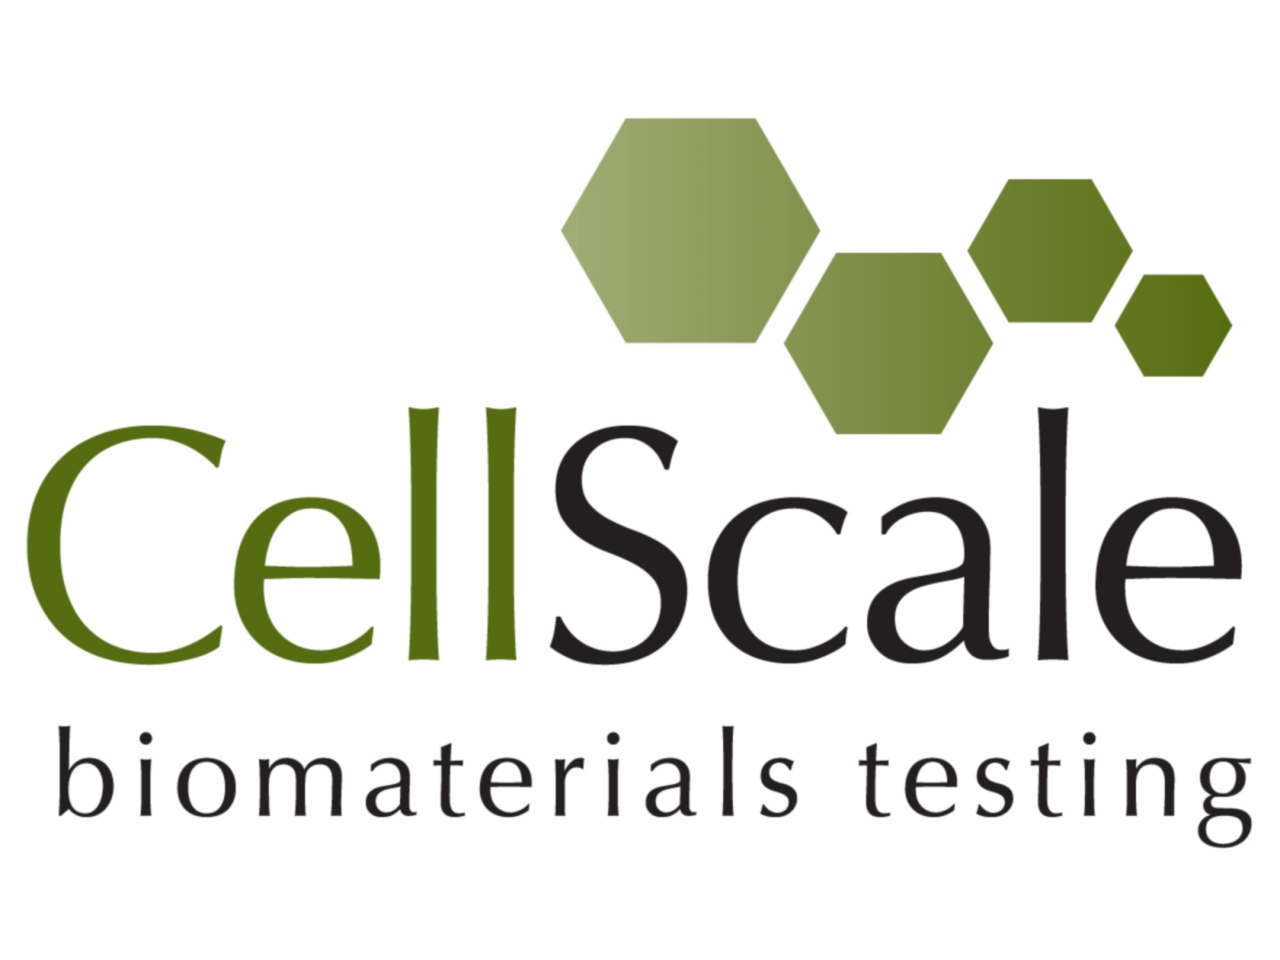 CellScale Biomaterials Testing